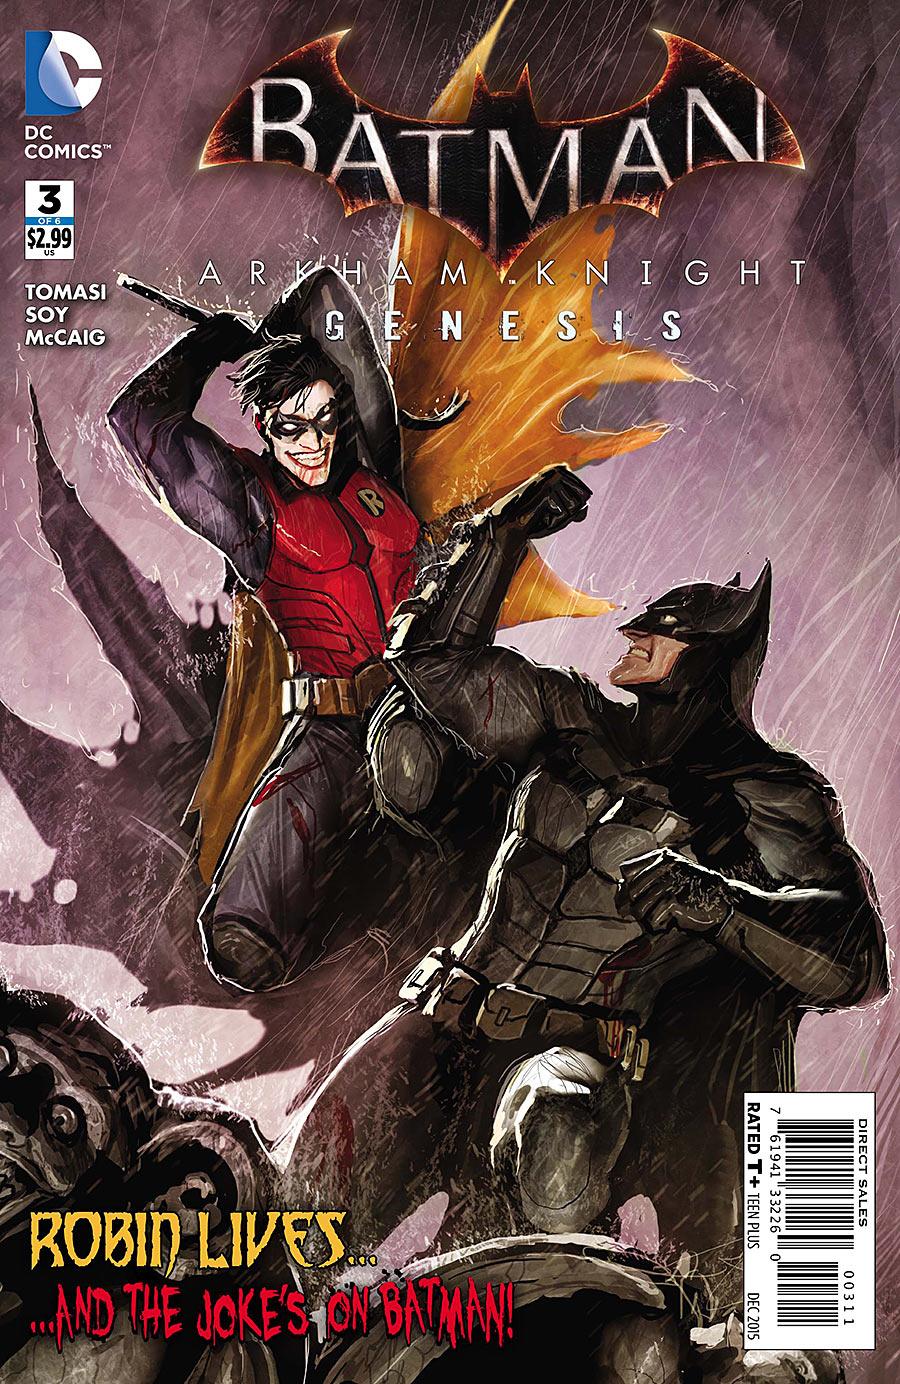 Batman: Arkham Knight - Genesis Vol. 1 #3